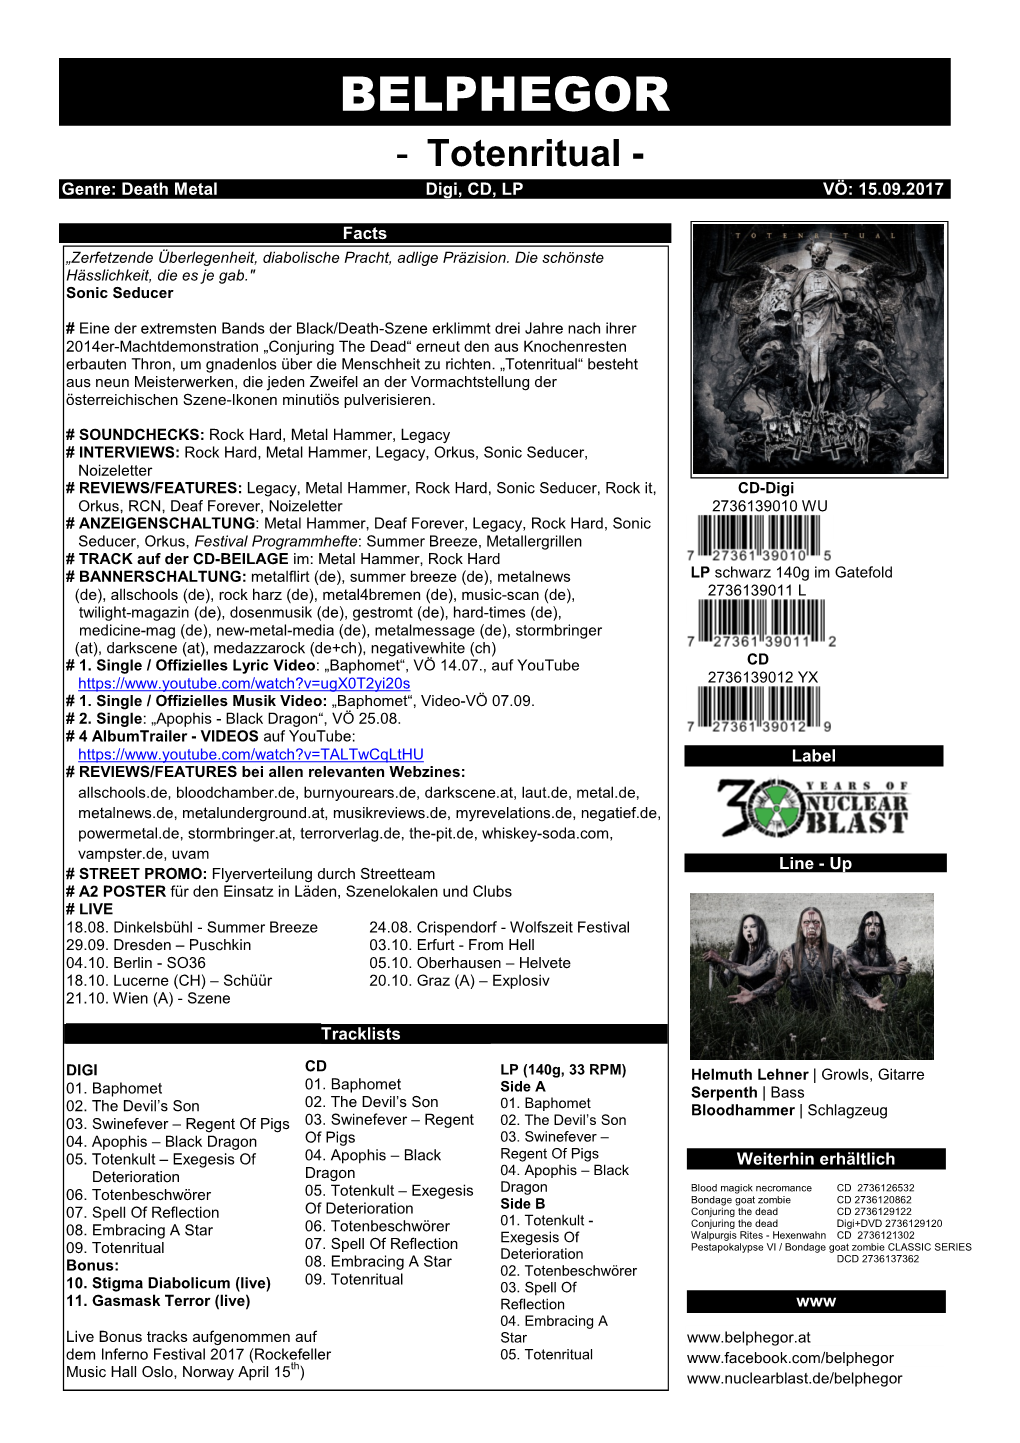 BELPHEGOR - Totenritual - Genre: Death Metal Digi, CD, LP VÖ: 15.09.2017